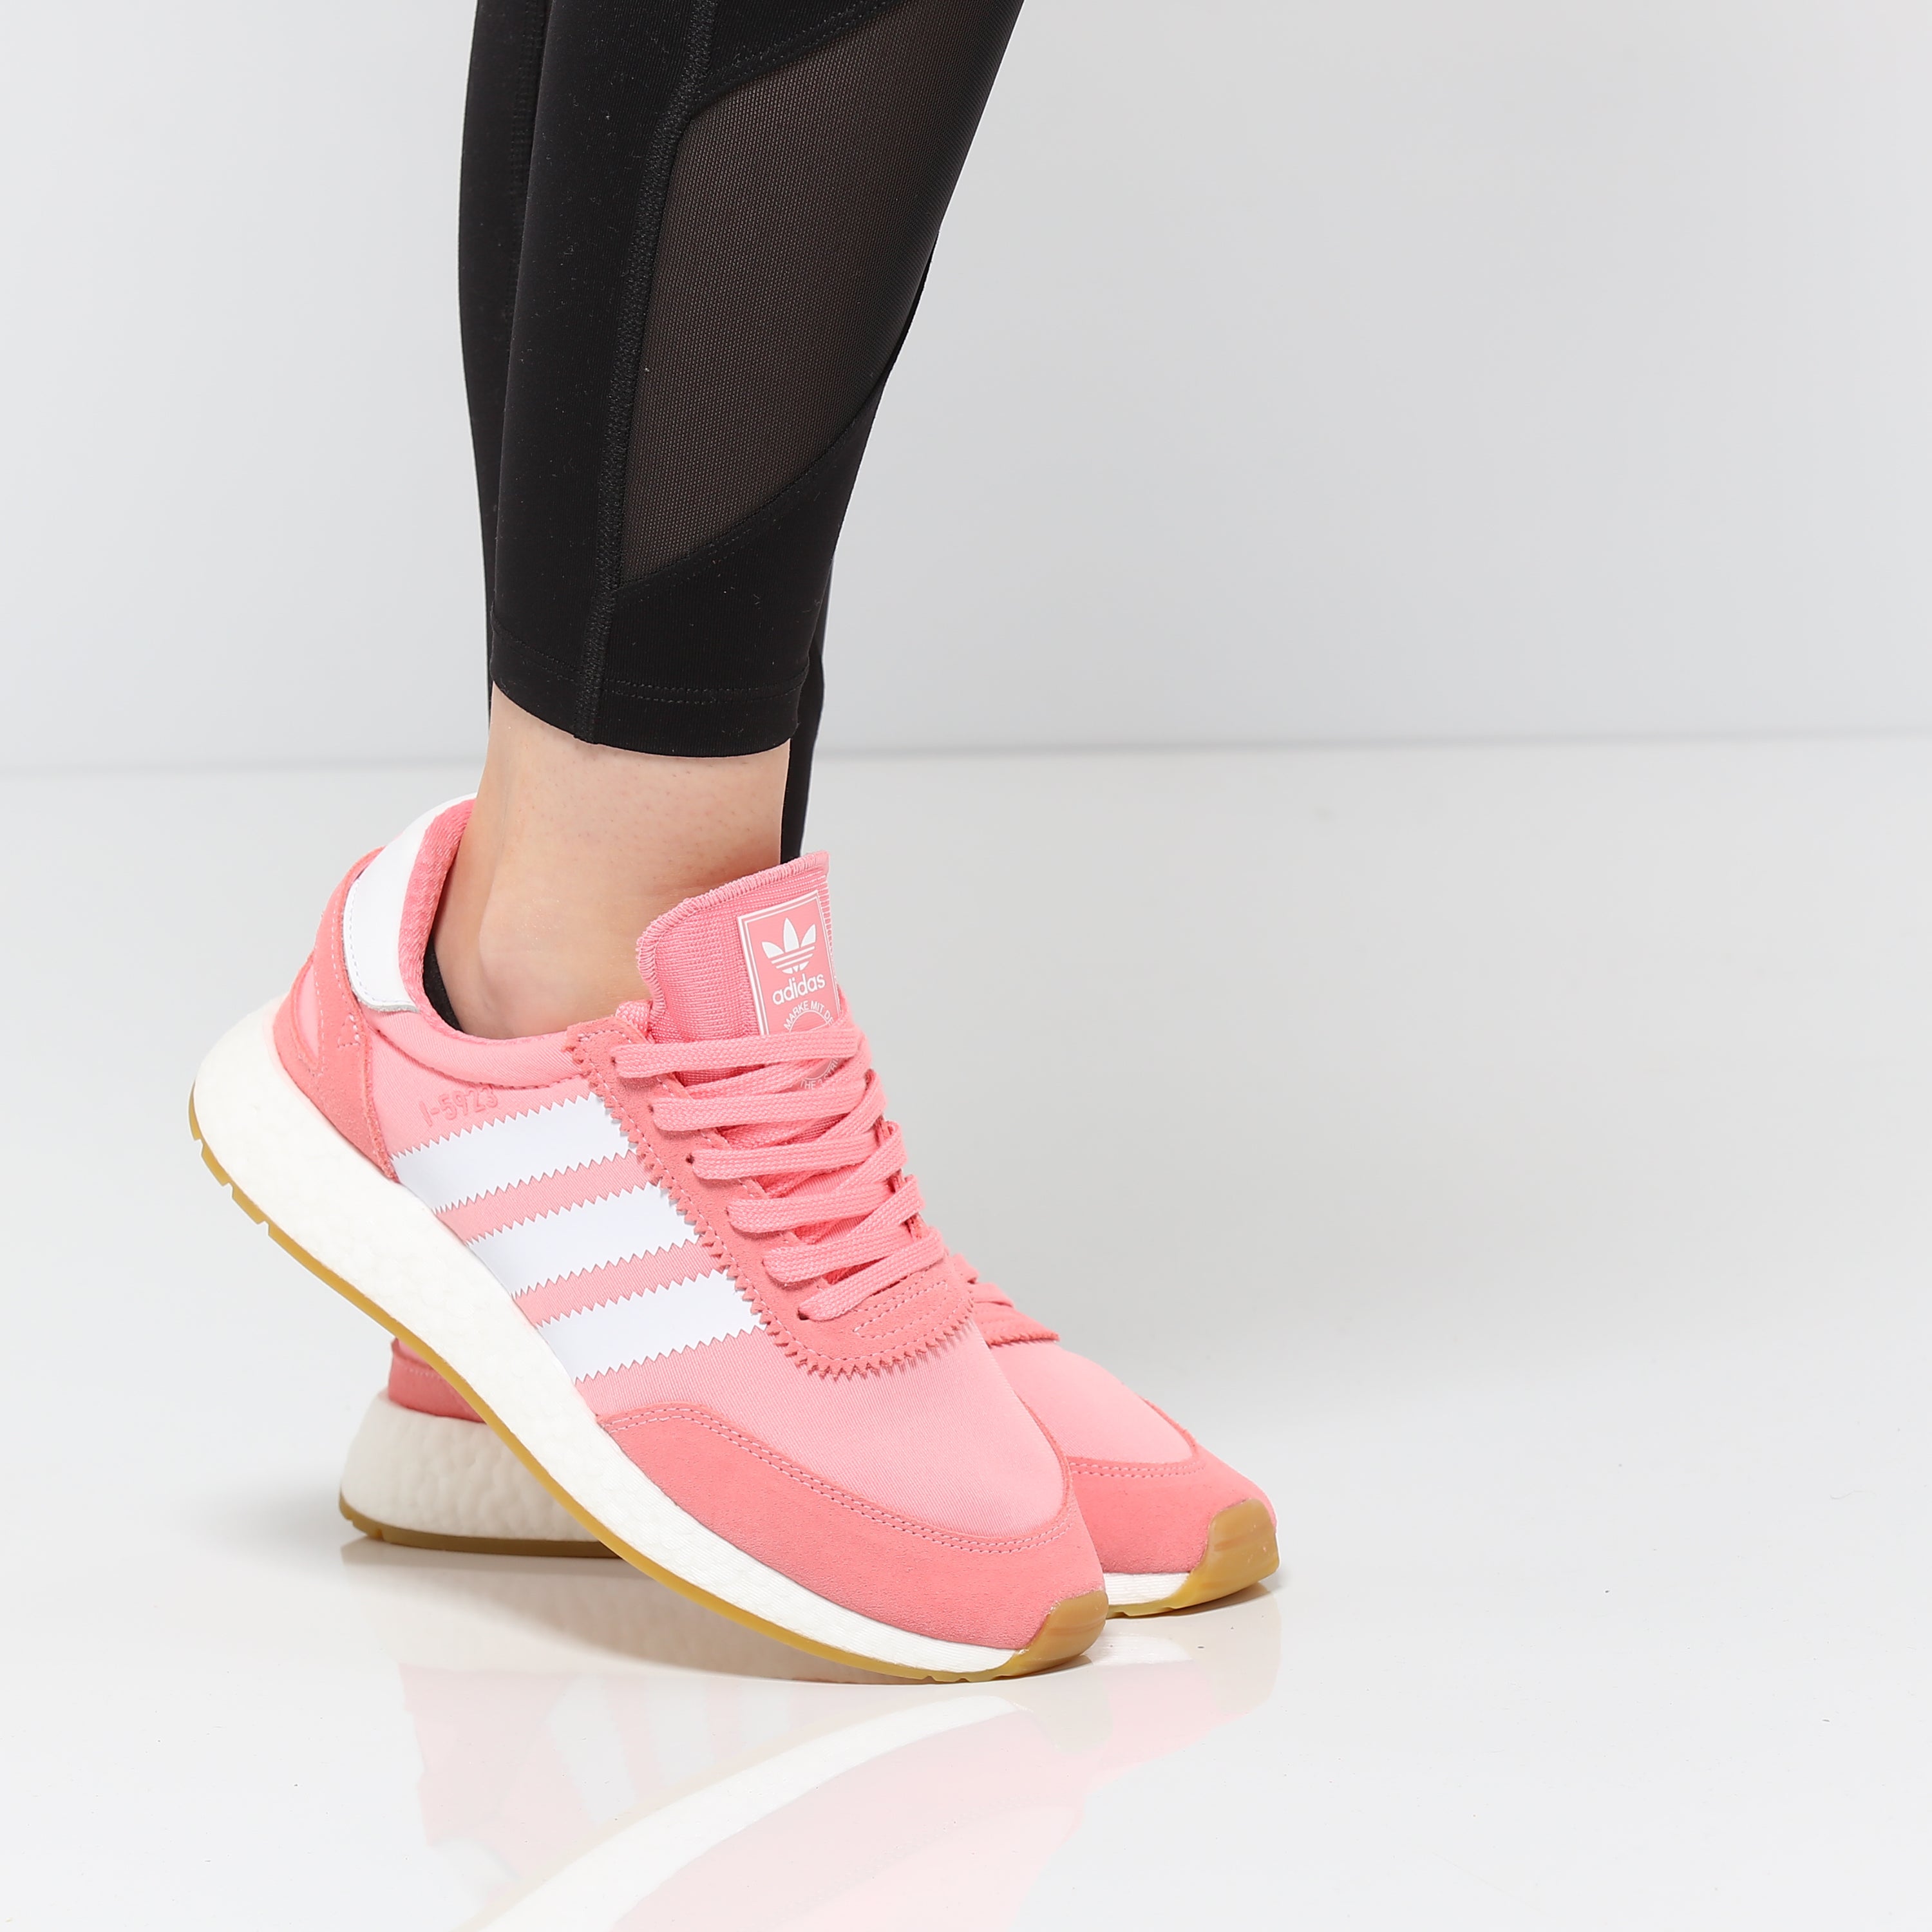 Adidas Women's I-5923 Pink/White 